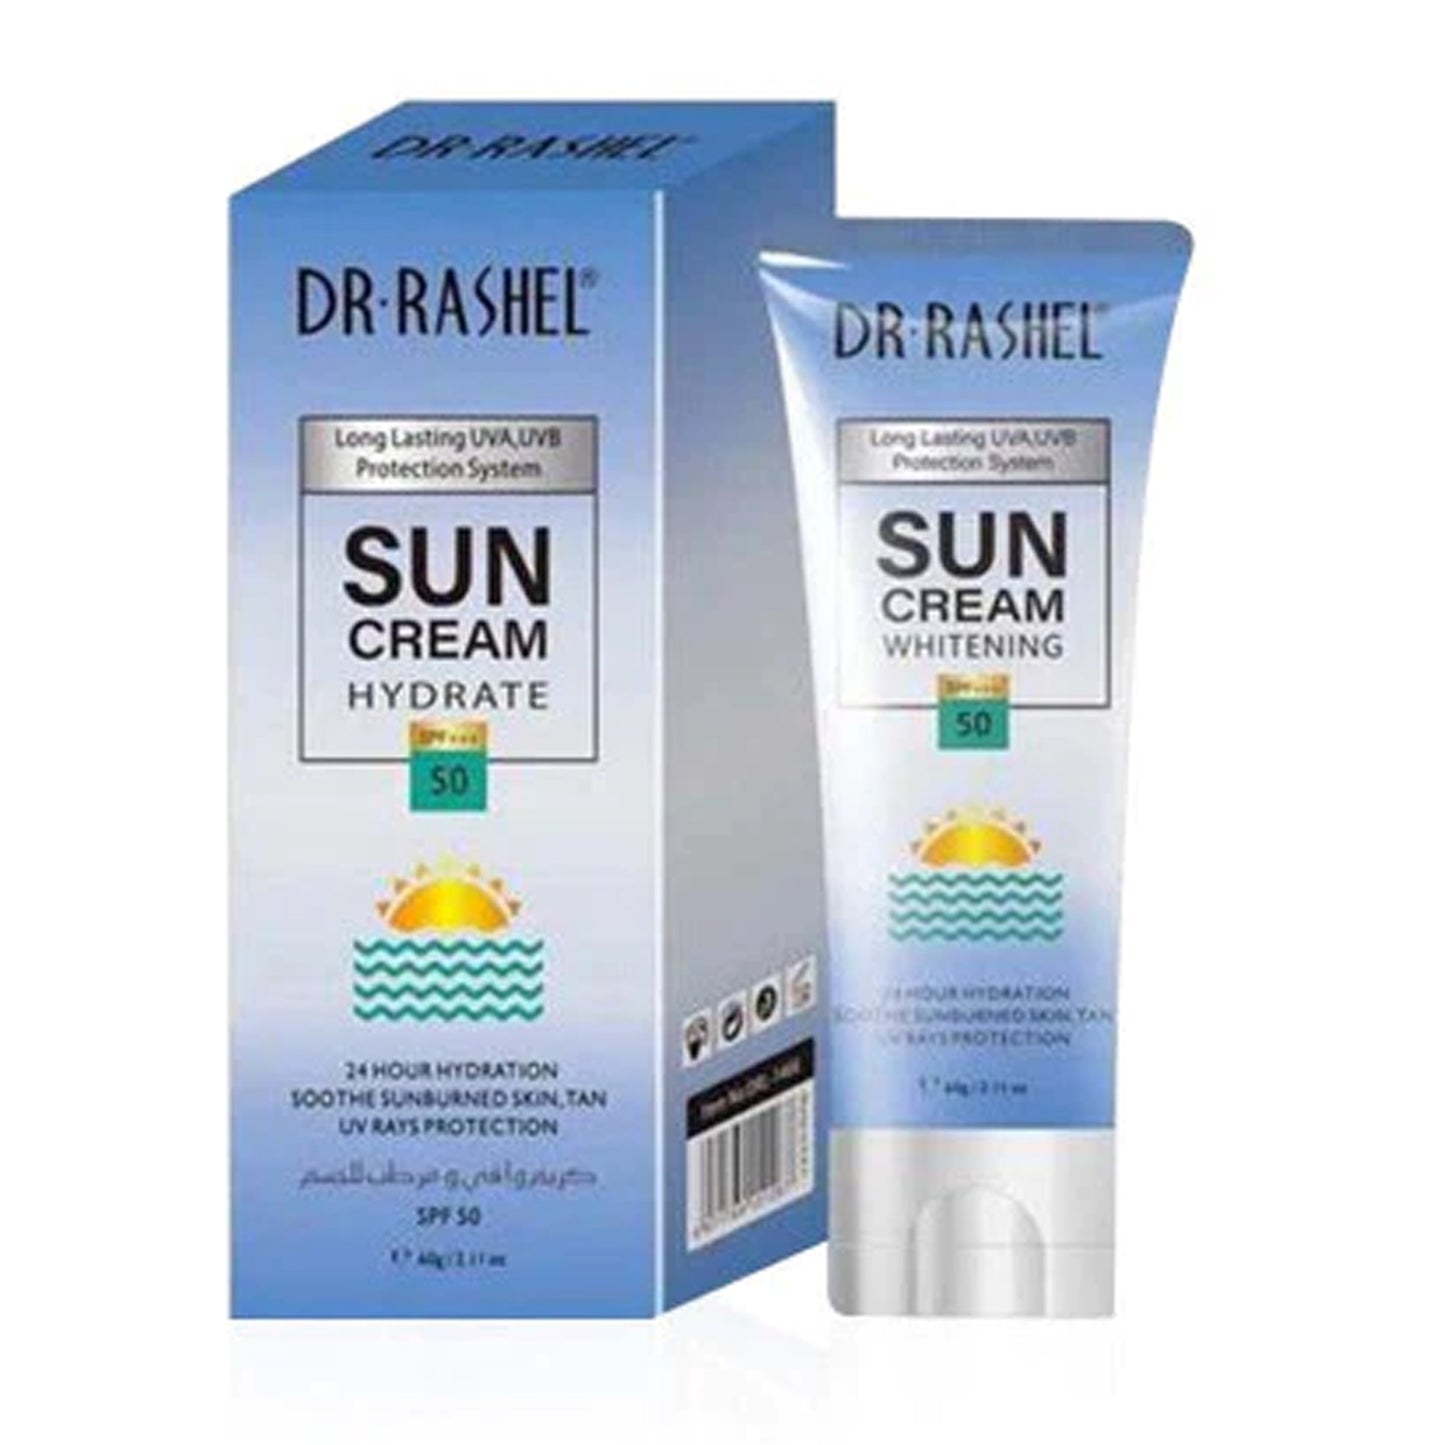 DR. RASHEL - PROTECT & HYDRATE SUN CREAM SPF+++ 50 - 60G